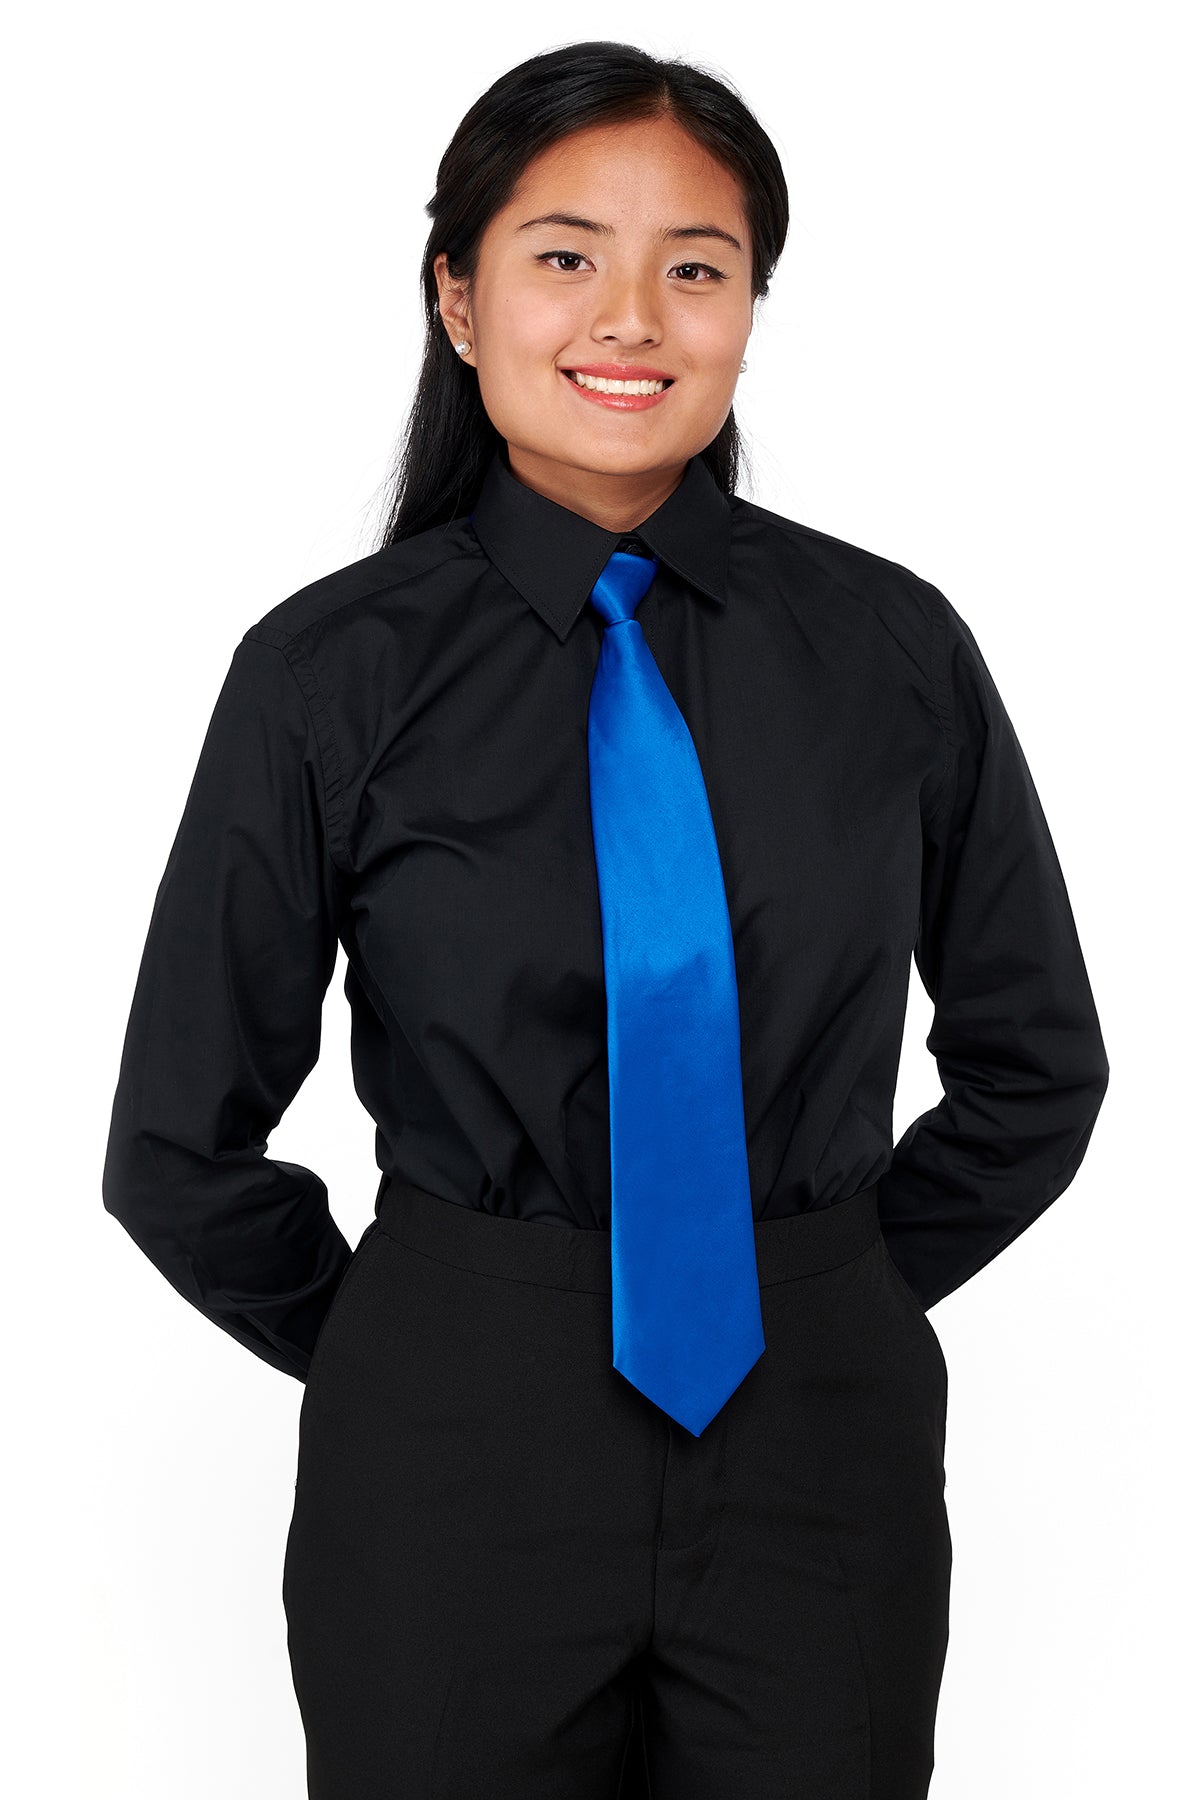 LOGAN (Style #6707L) - Ladies Black Shirt With Tie Package